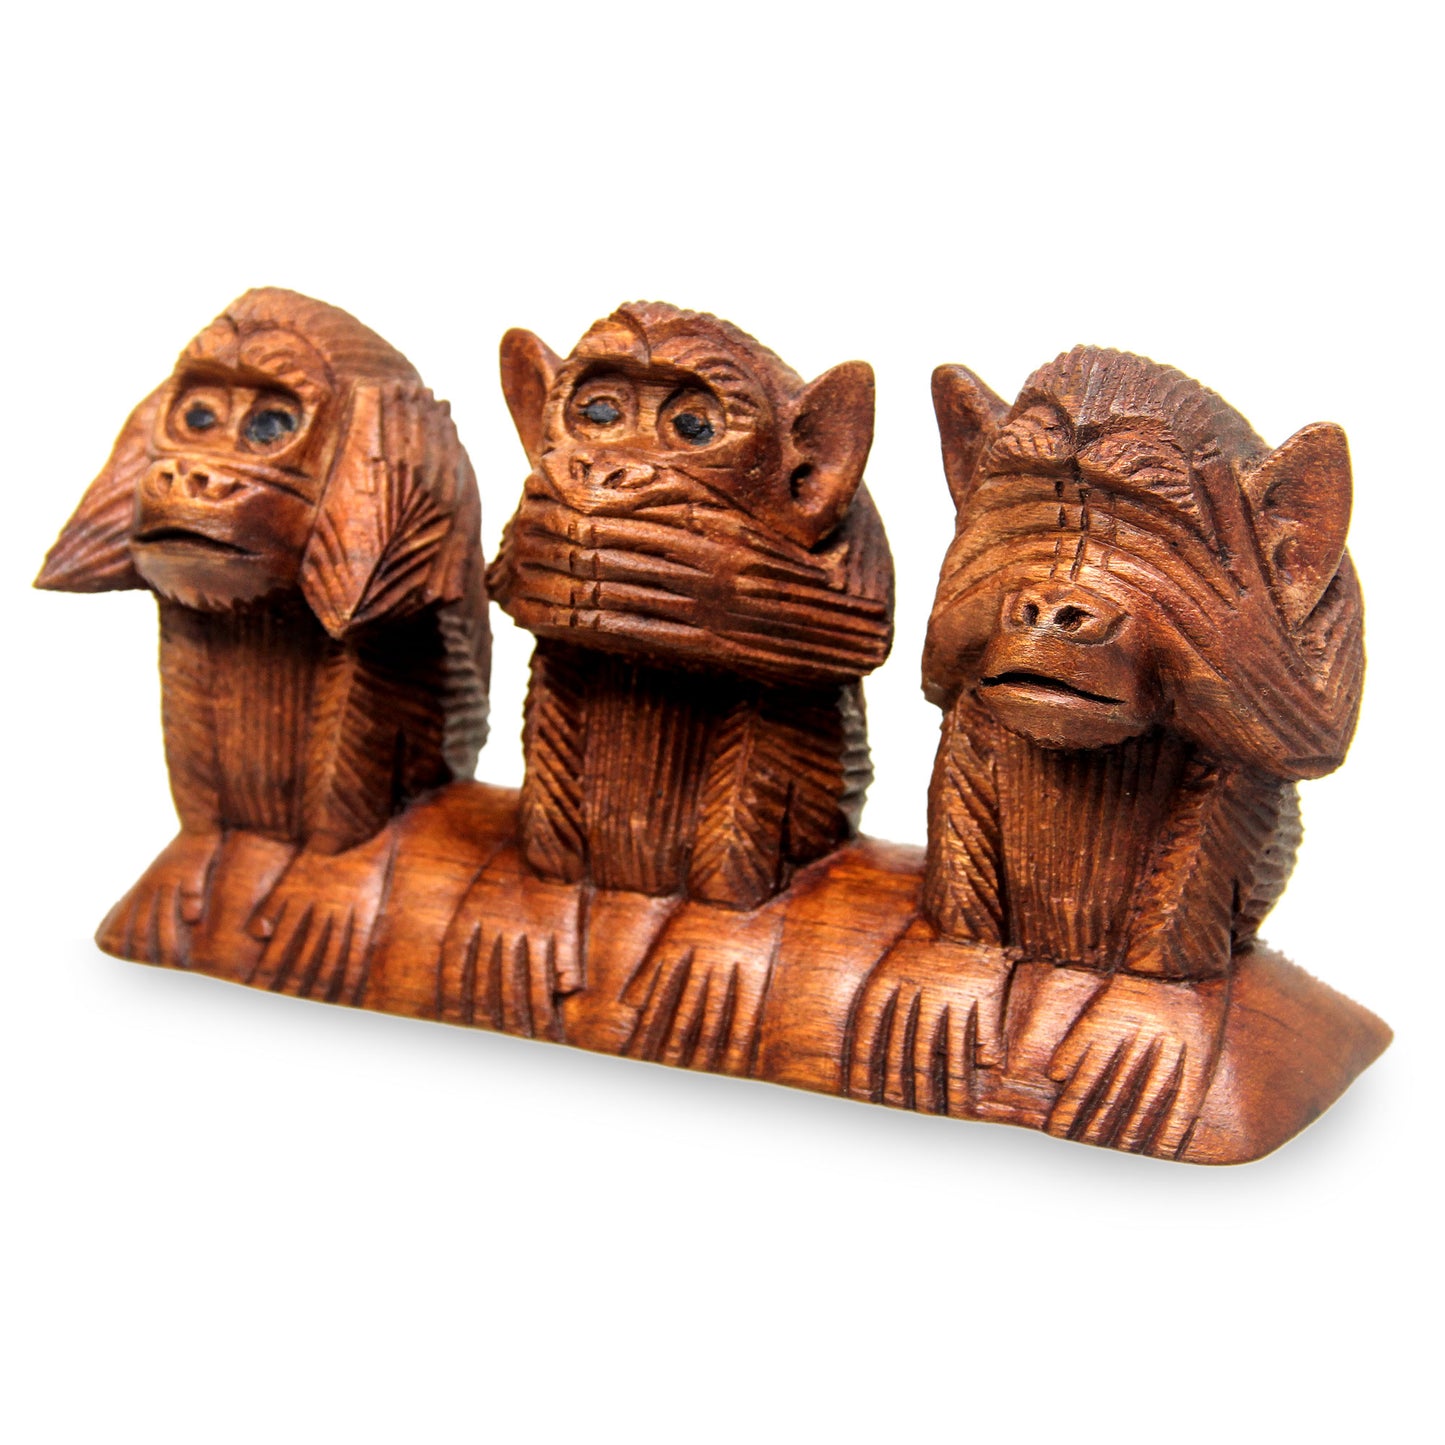 Three Wise Monkeys Suar Wood Proverb Sculpture